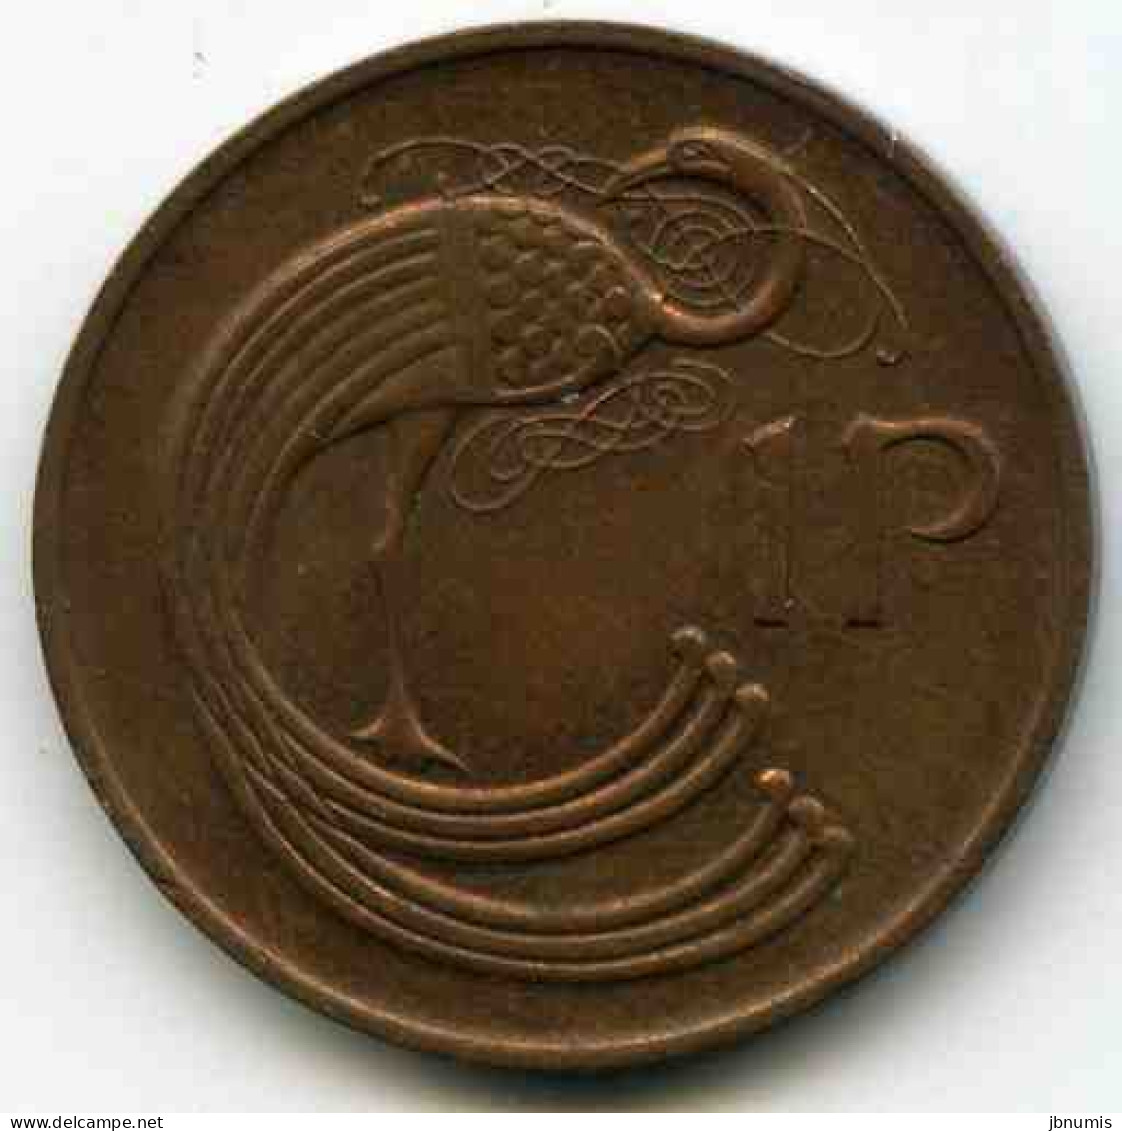 Irlande Ireland 1 Penny 1980 KM 20 - Irlanda